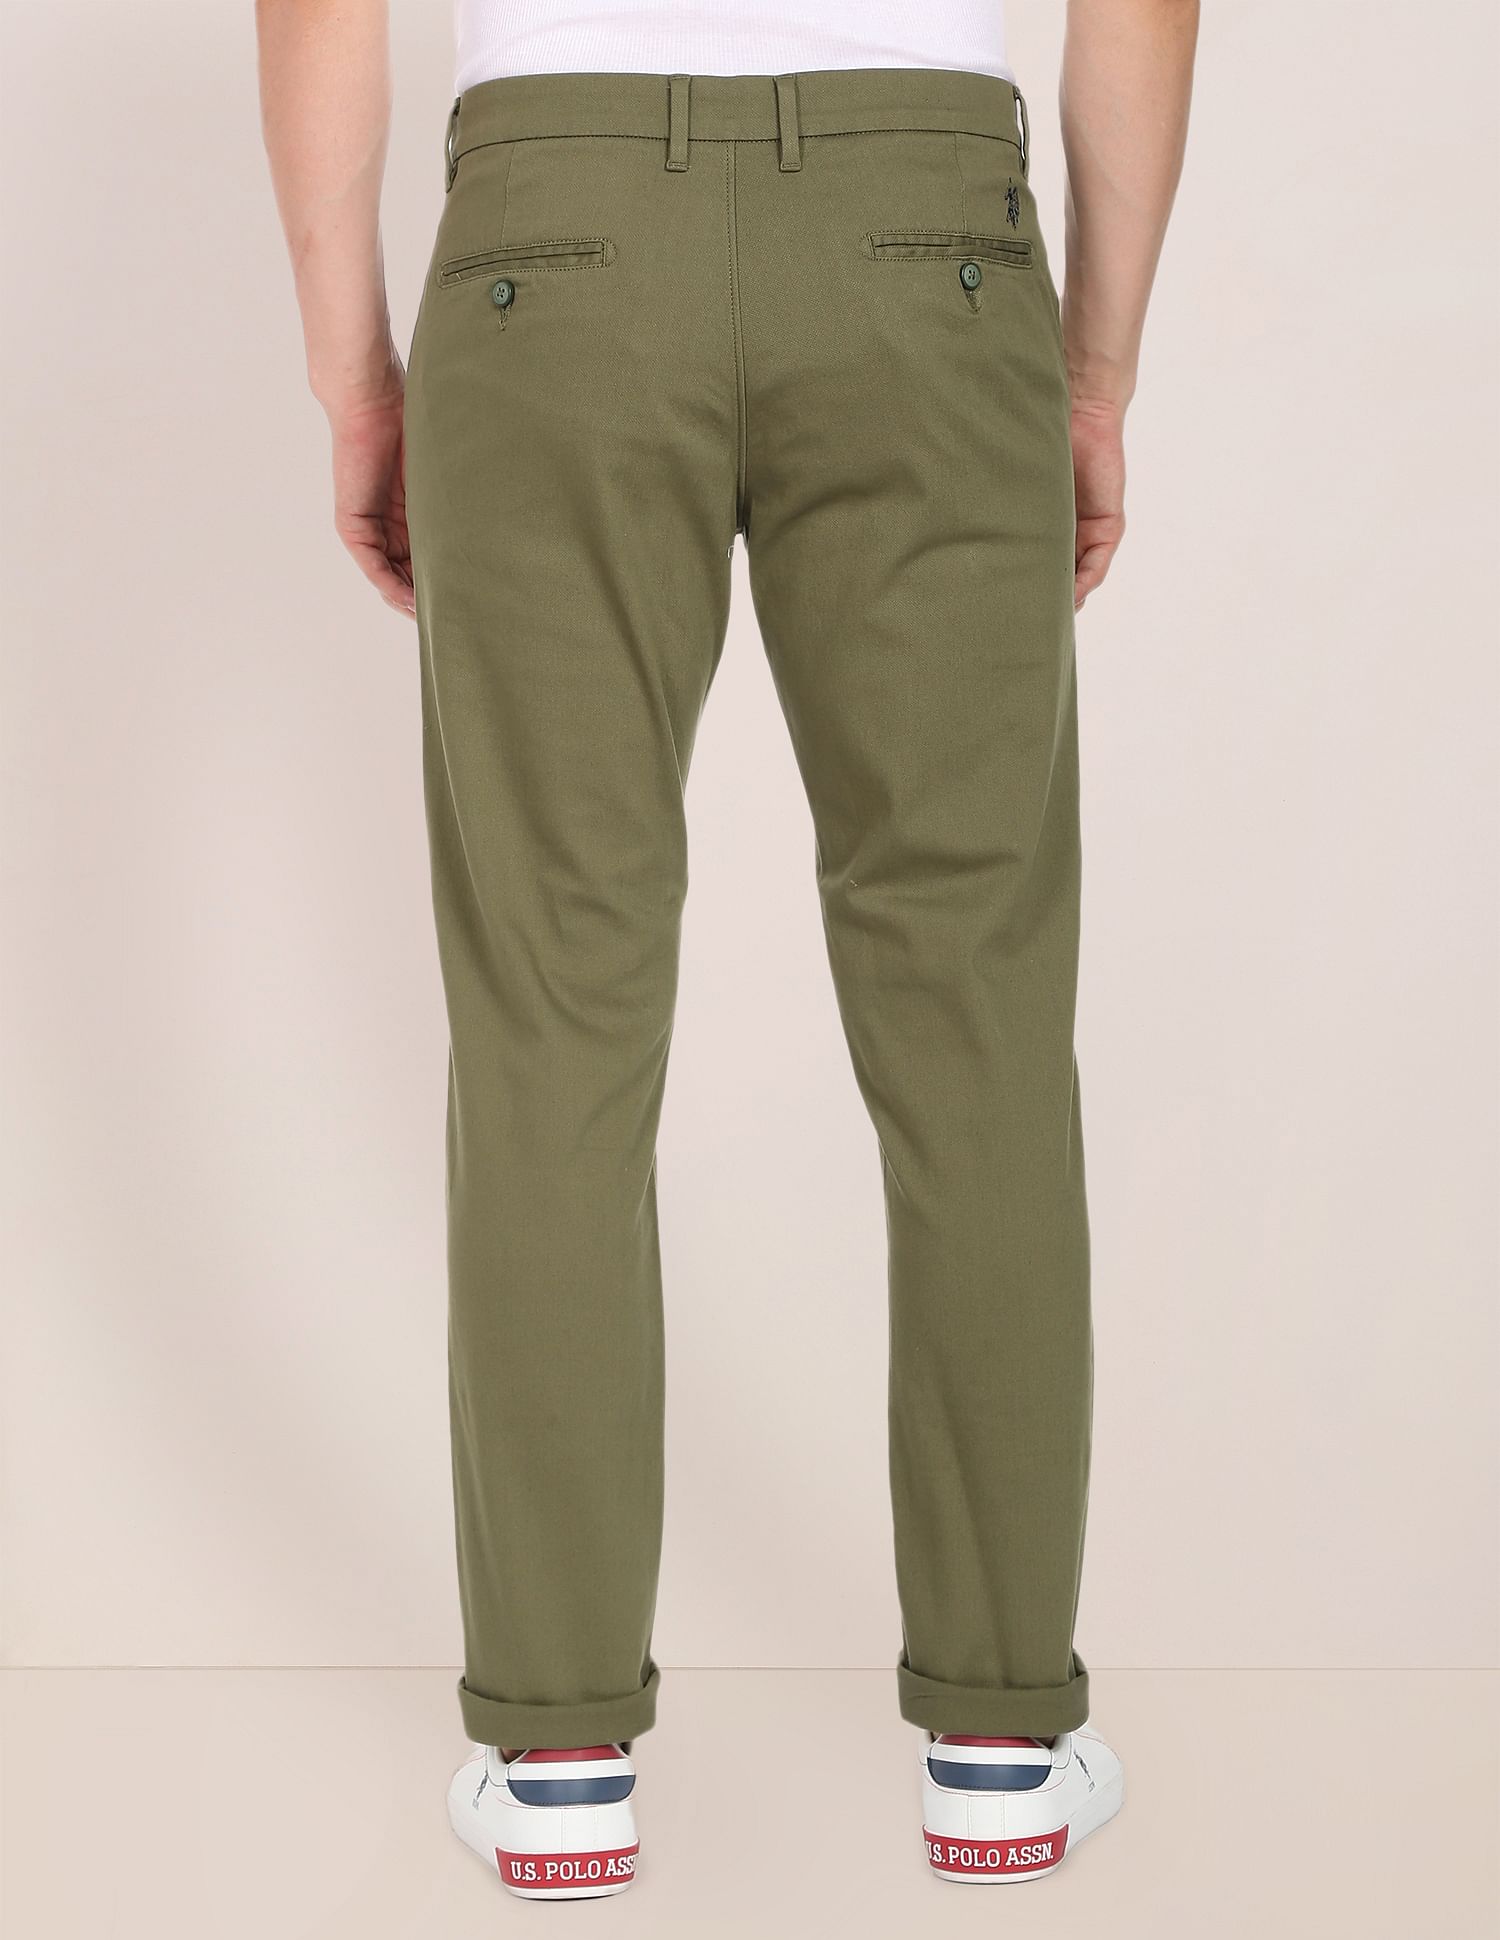 U.S. Polo Assn. Men's Microfleece Lounge Pajama Pants, Sizes S-3XL -  Walmart.com